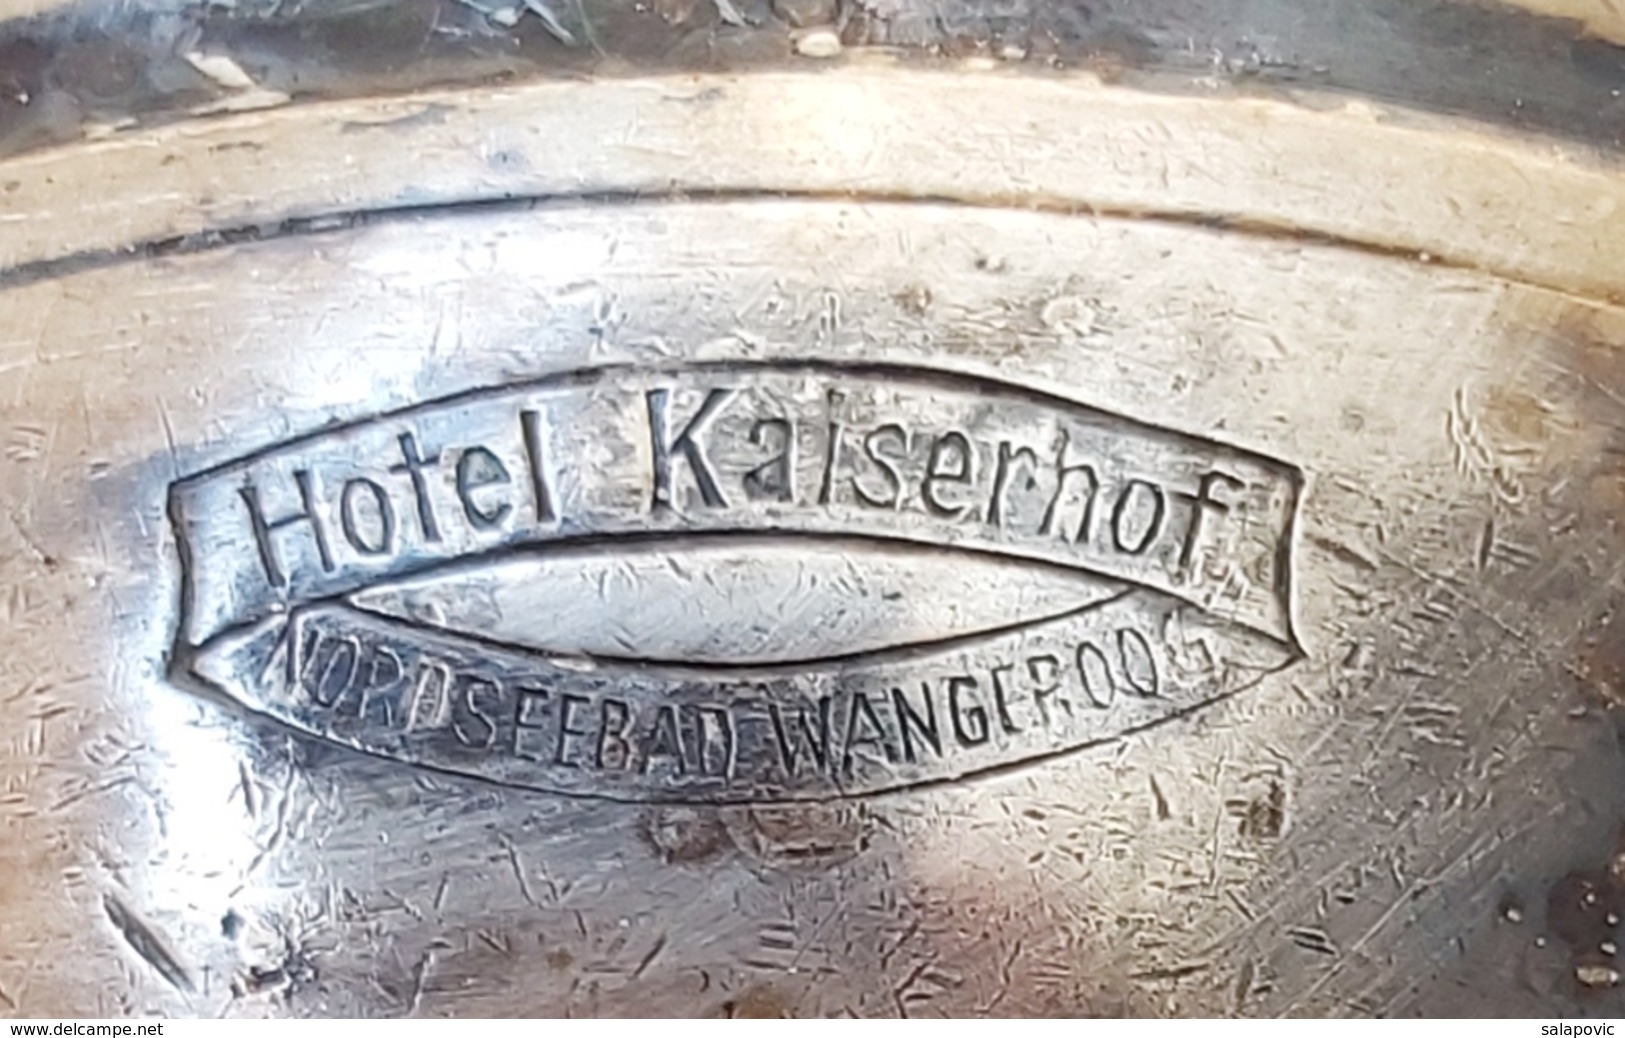 Old Cup Wine Glass Hotel Kaiserhof, Nord Seebad Wangeroog - Cups